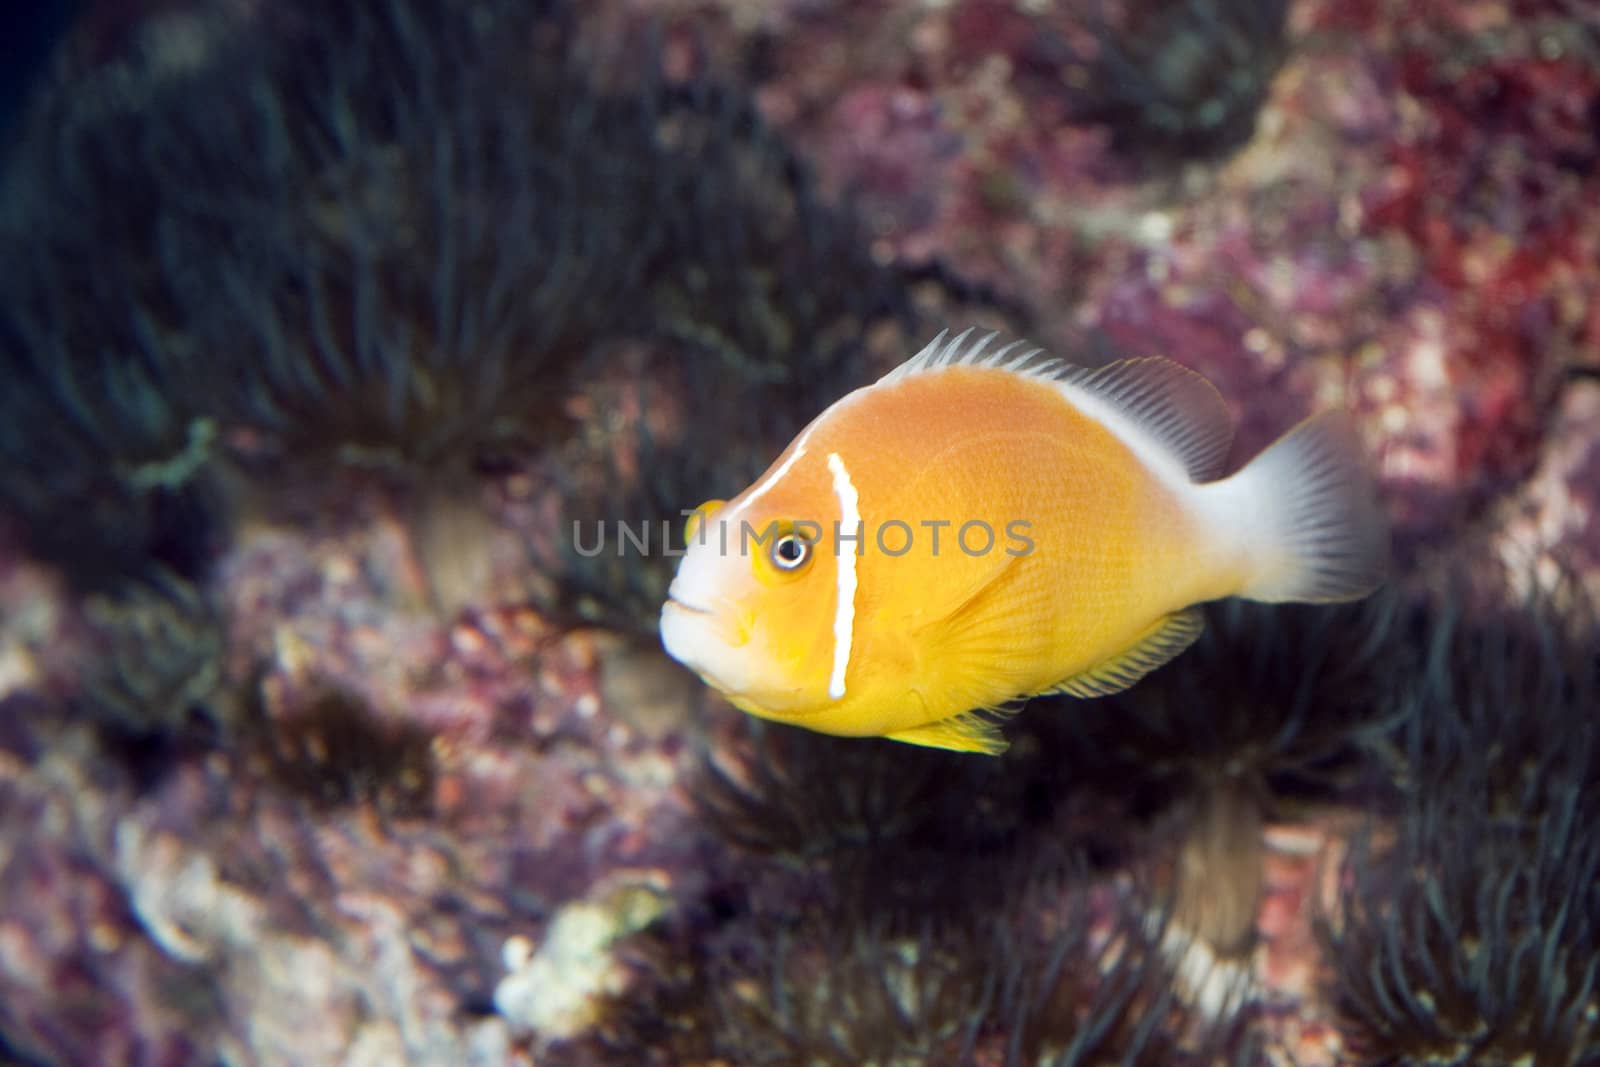 A close photo of a small yellow fish